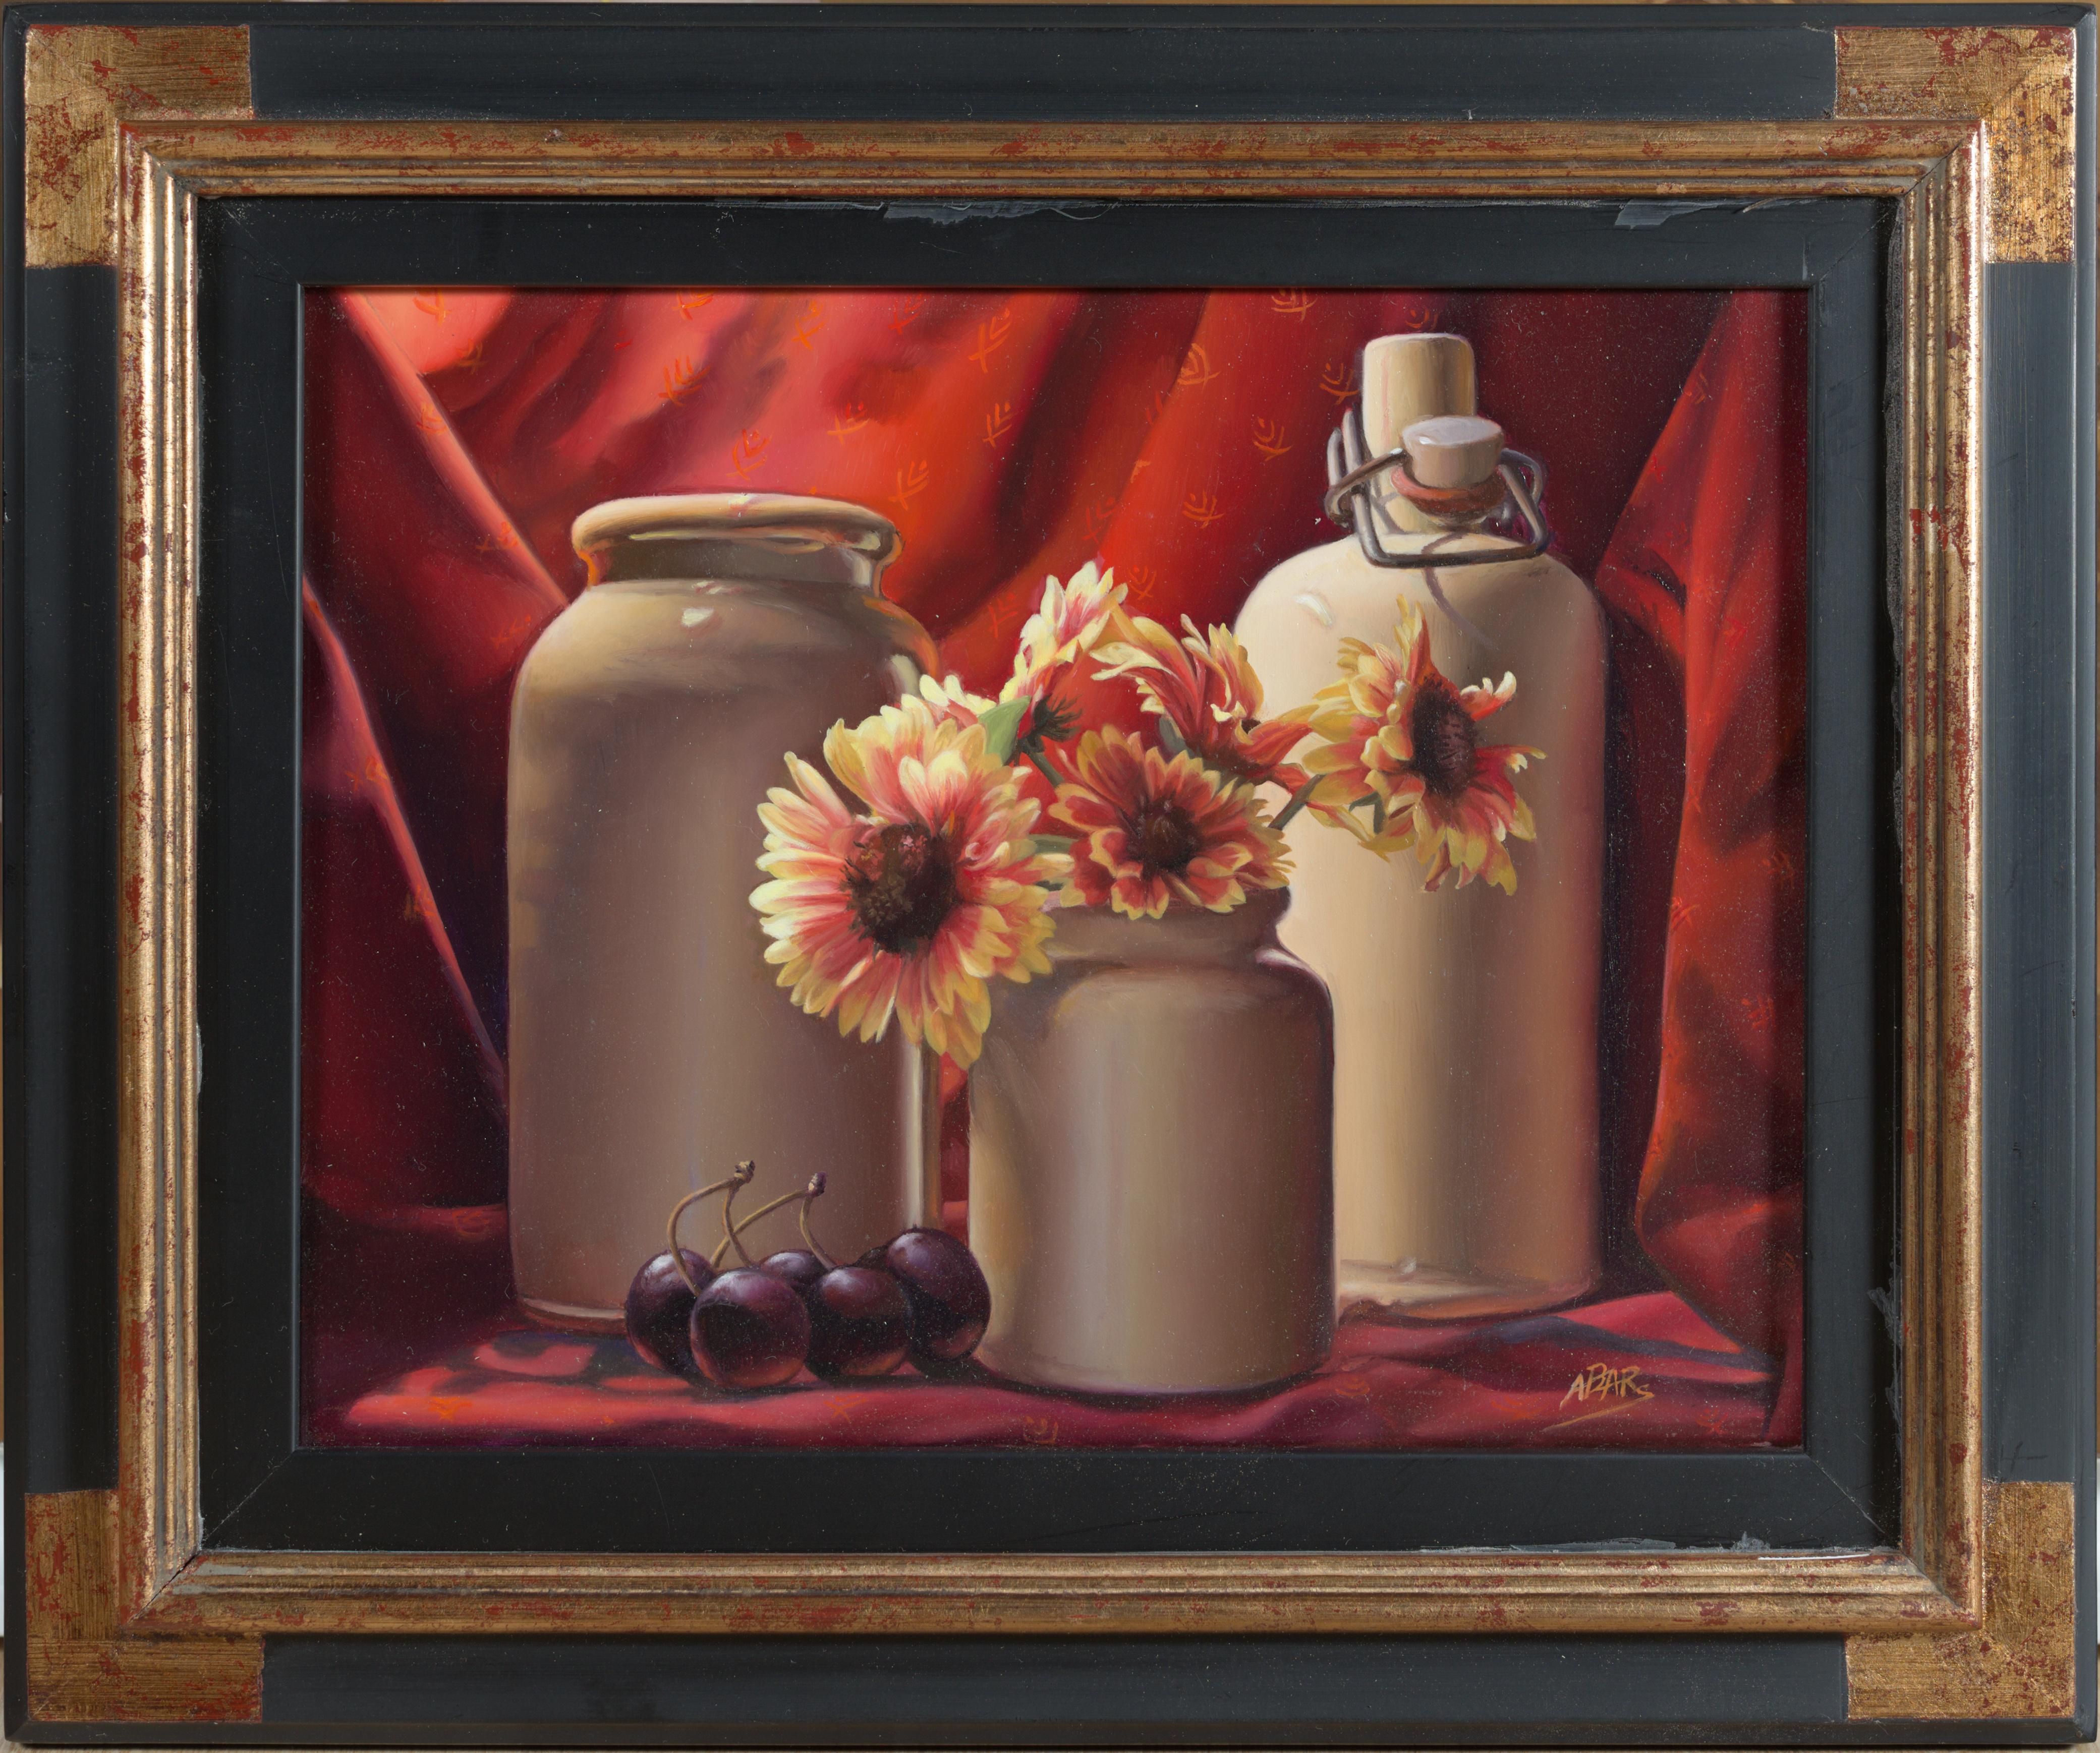 “Cherry”, Bottle Ceramic Vase with Flowers Shiny Fabric Symbolism Oil Painting